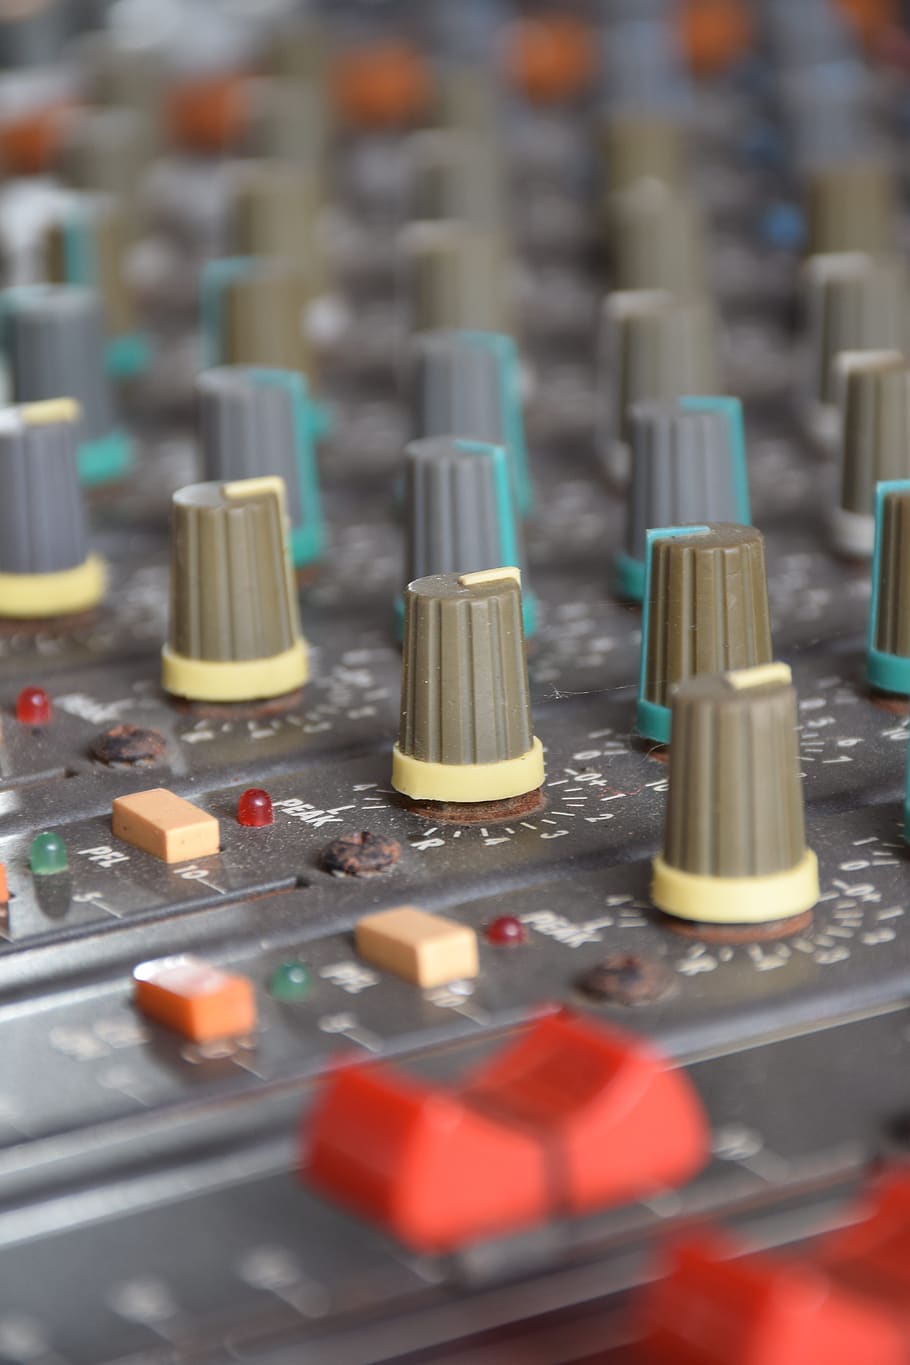 mixer, sound, music, audio, the sound, music studio, controls, the device, tool, console